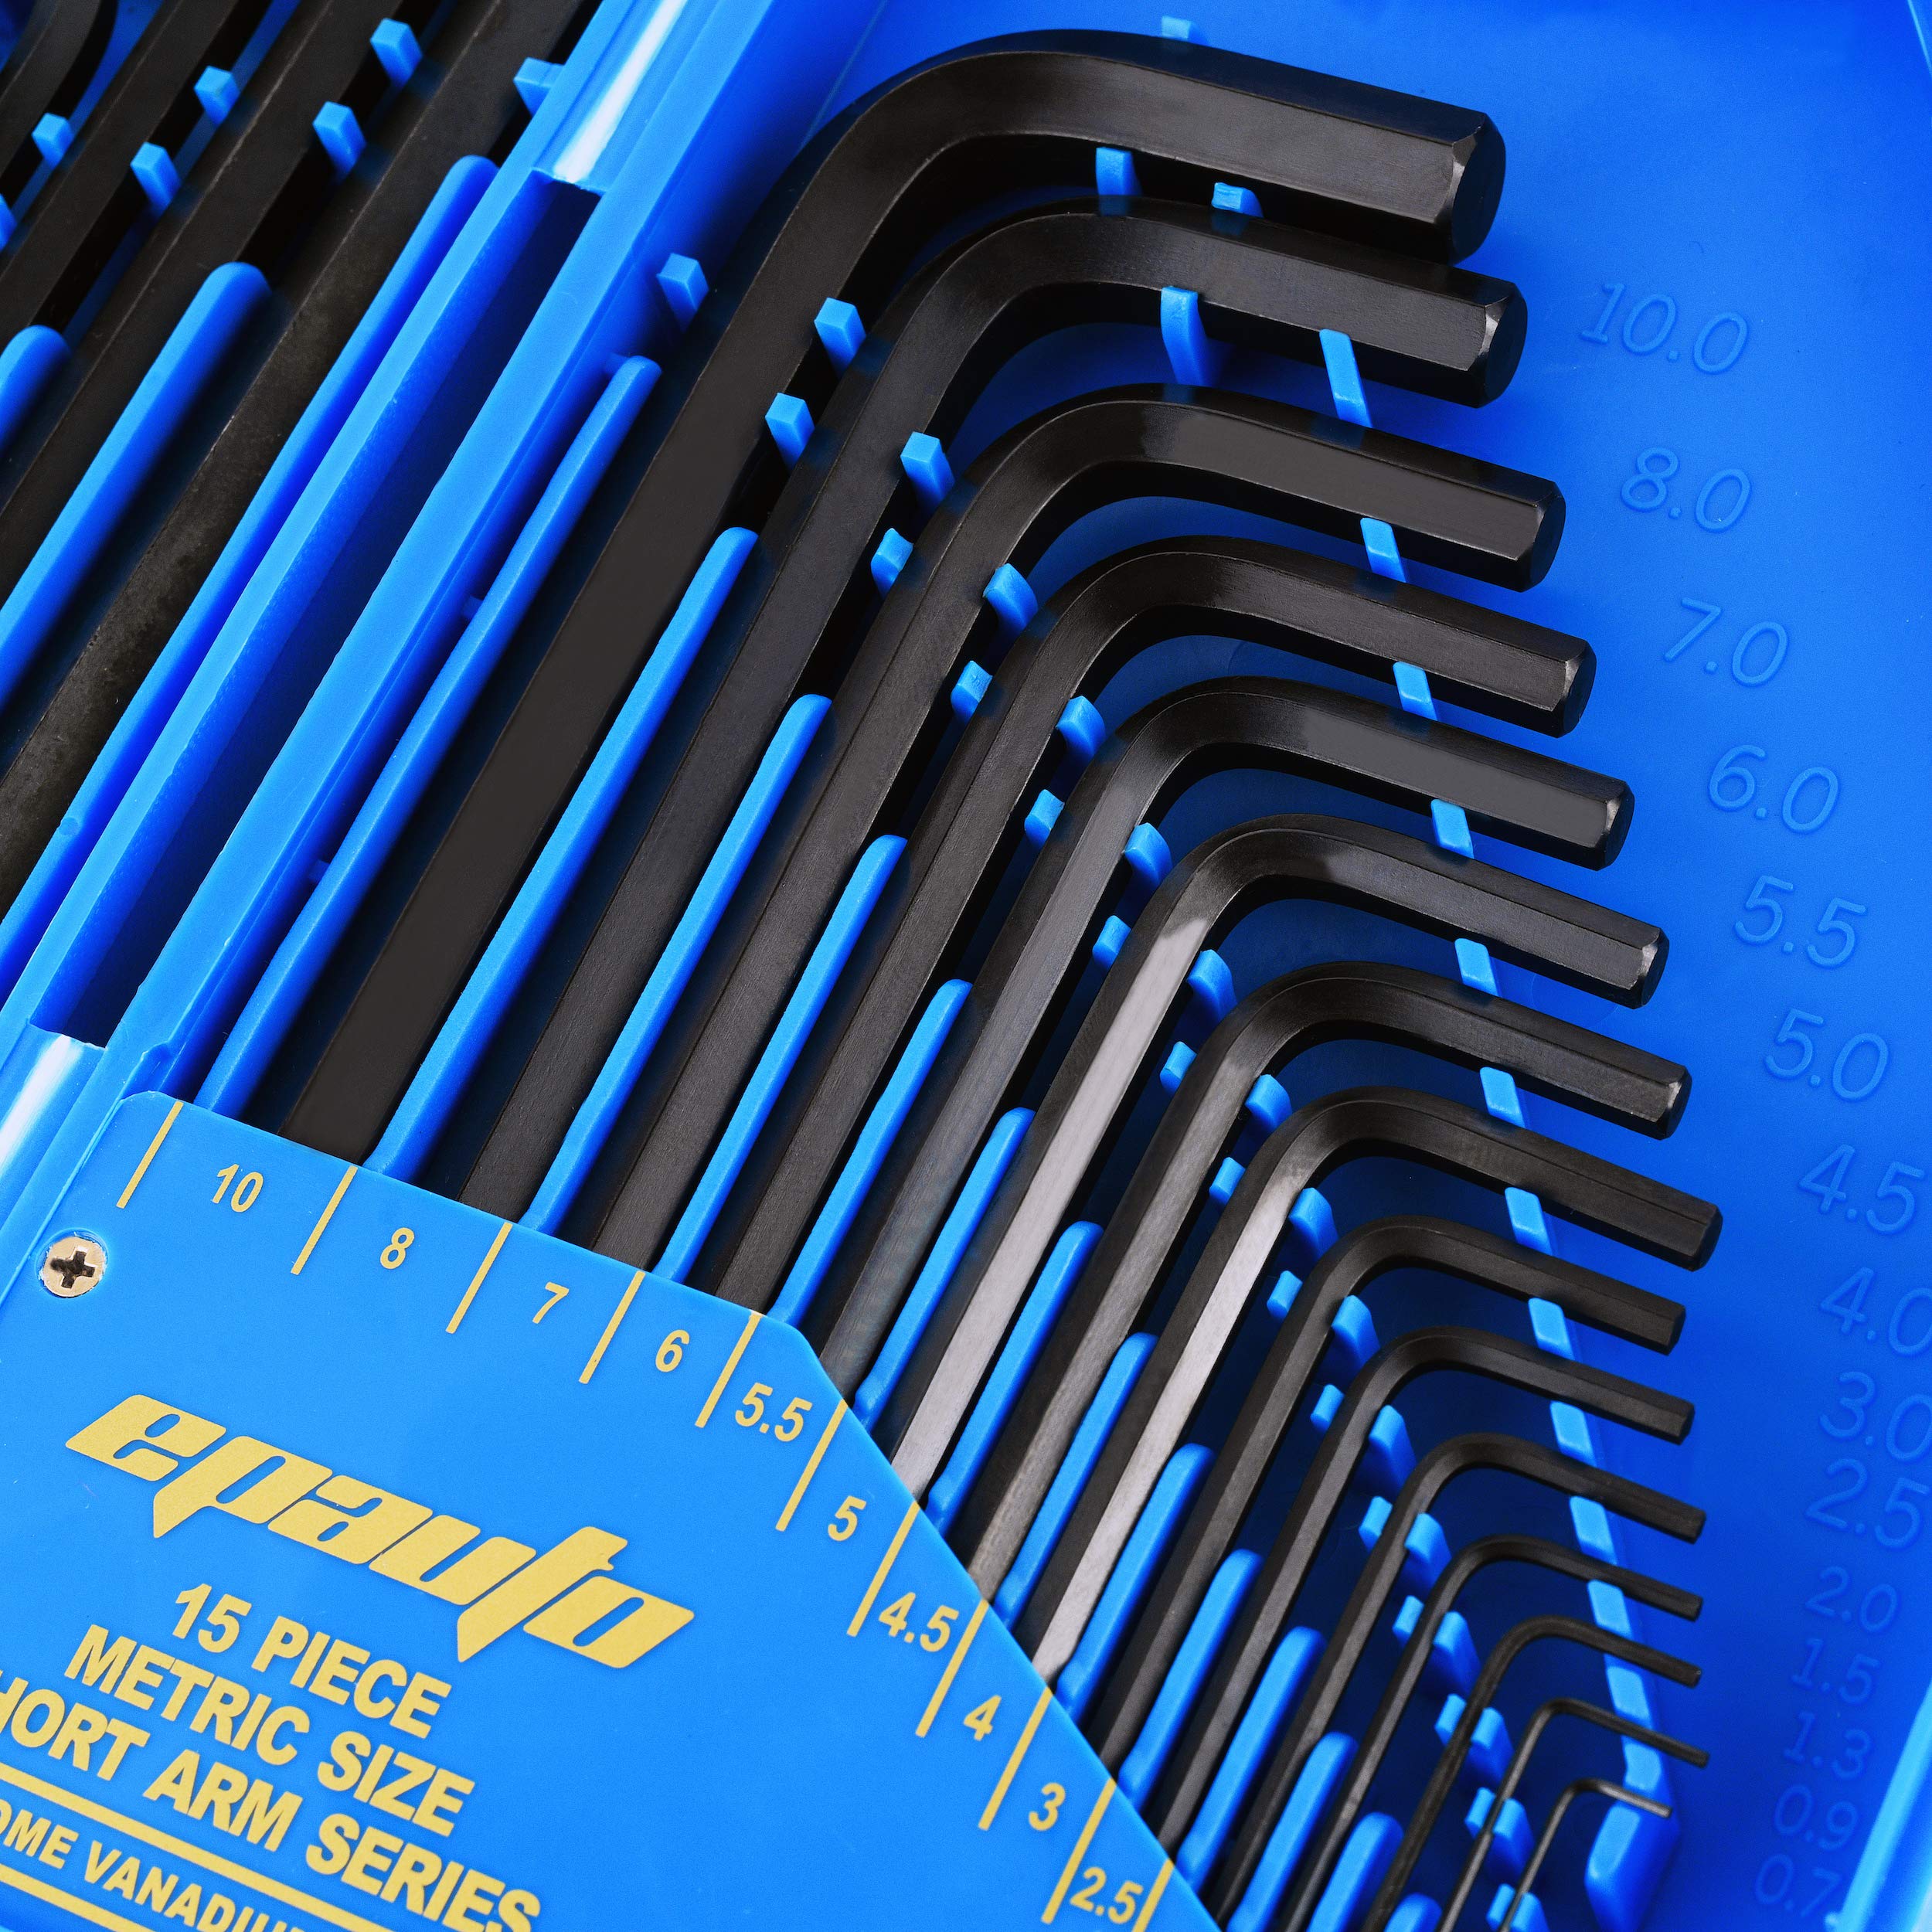 EPAuto Allen Key Set Hex Key Wrench Set, 30-Pieces (0.028-3/8 inch,0.7-10mm)